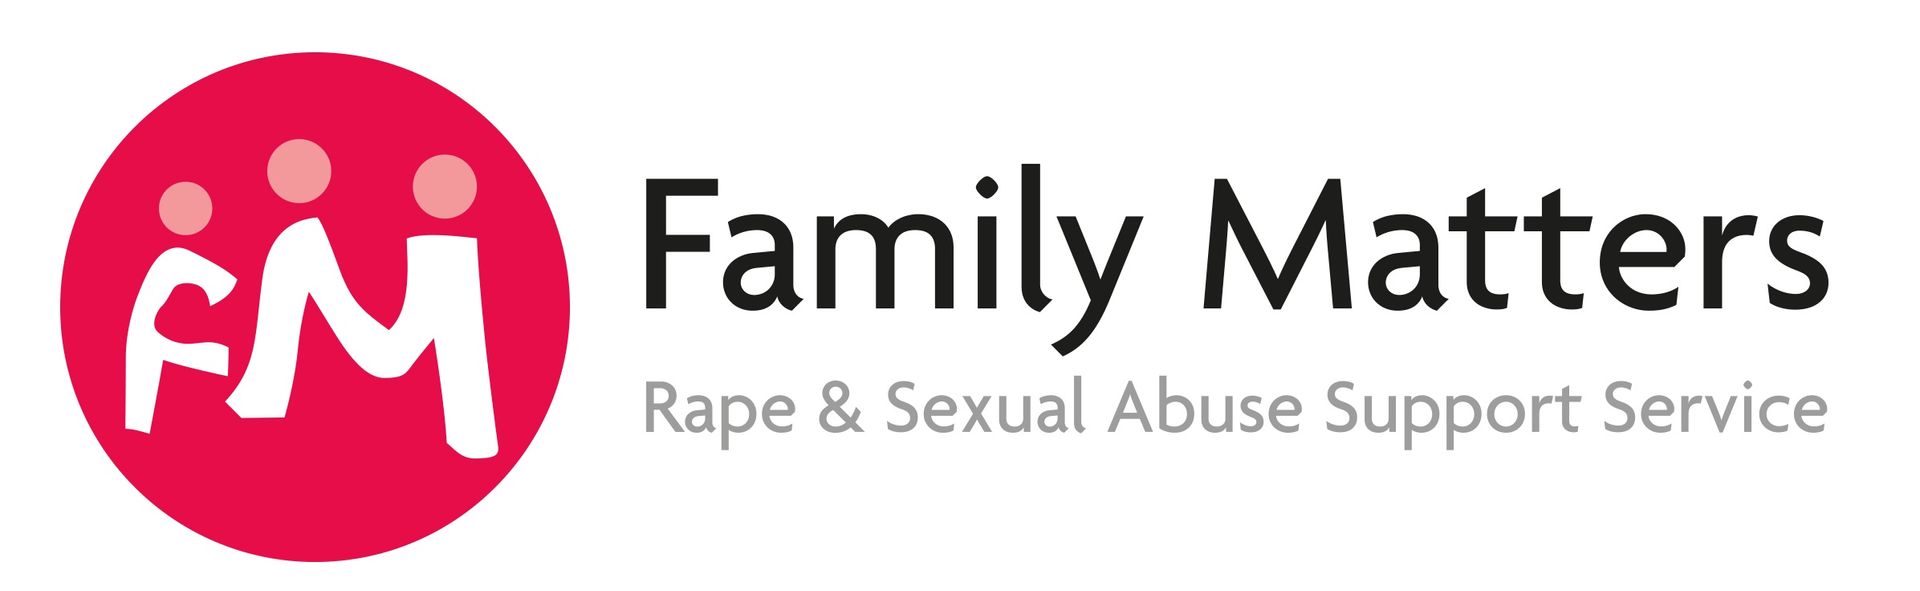 Family Matters logo